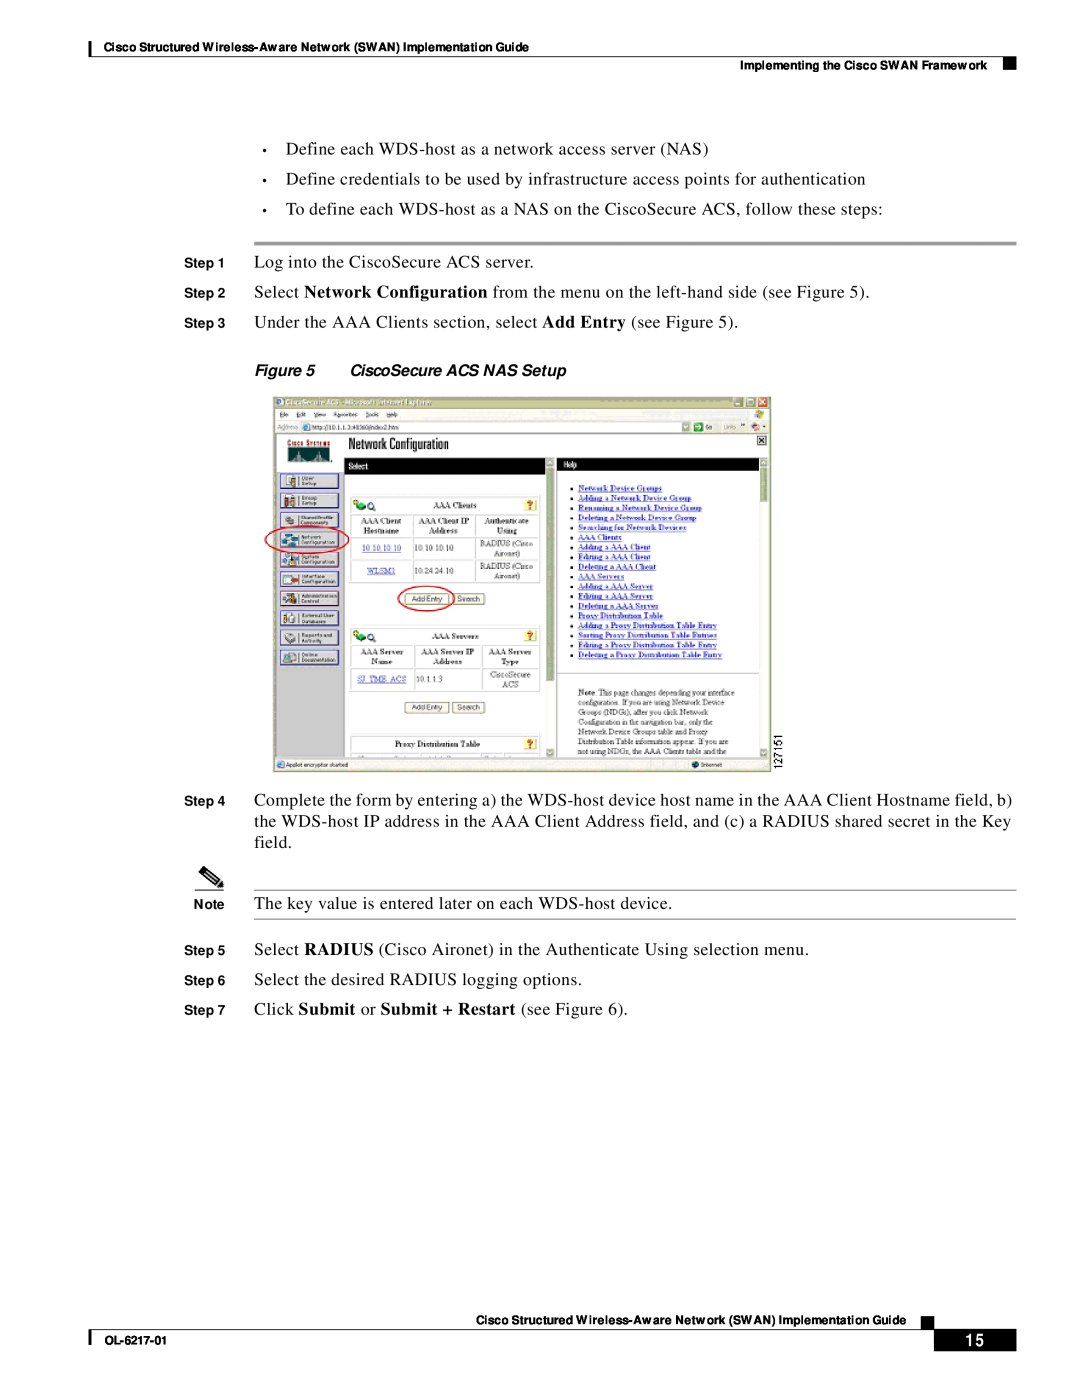 Cisco Systems OL-6217-01 manual Define each WDS-host as a network access server NAS 